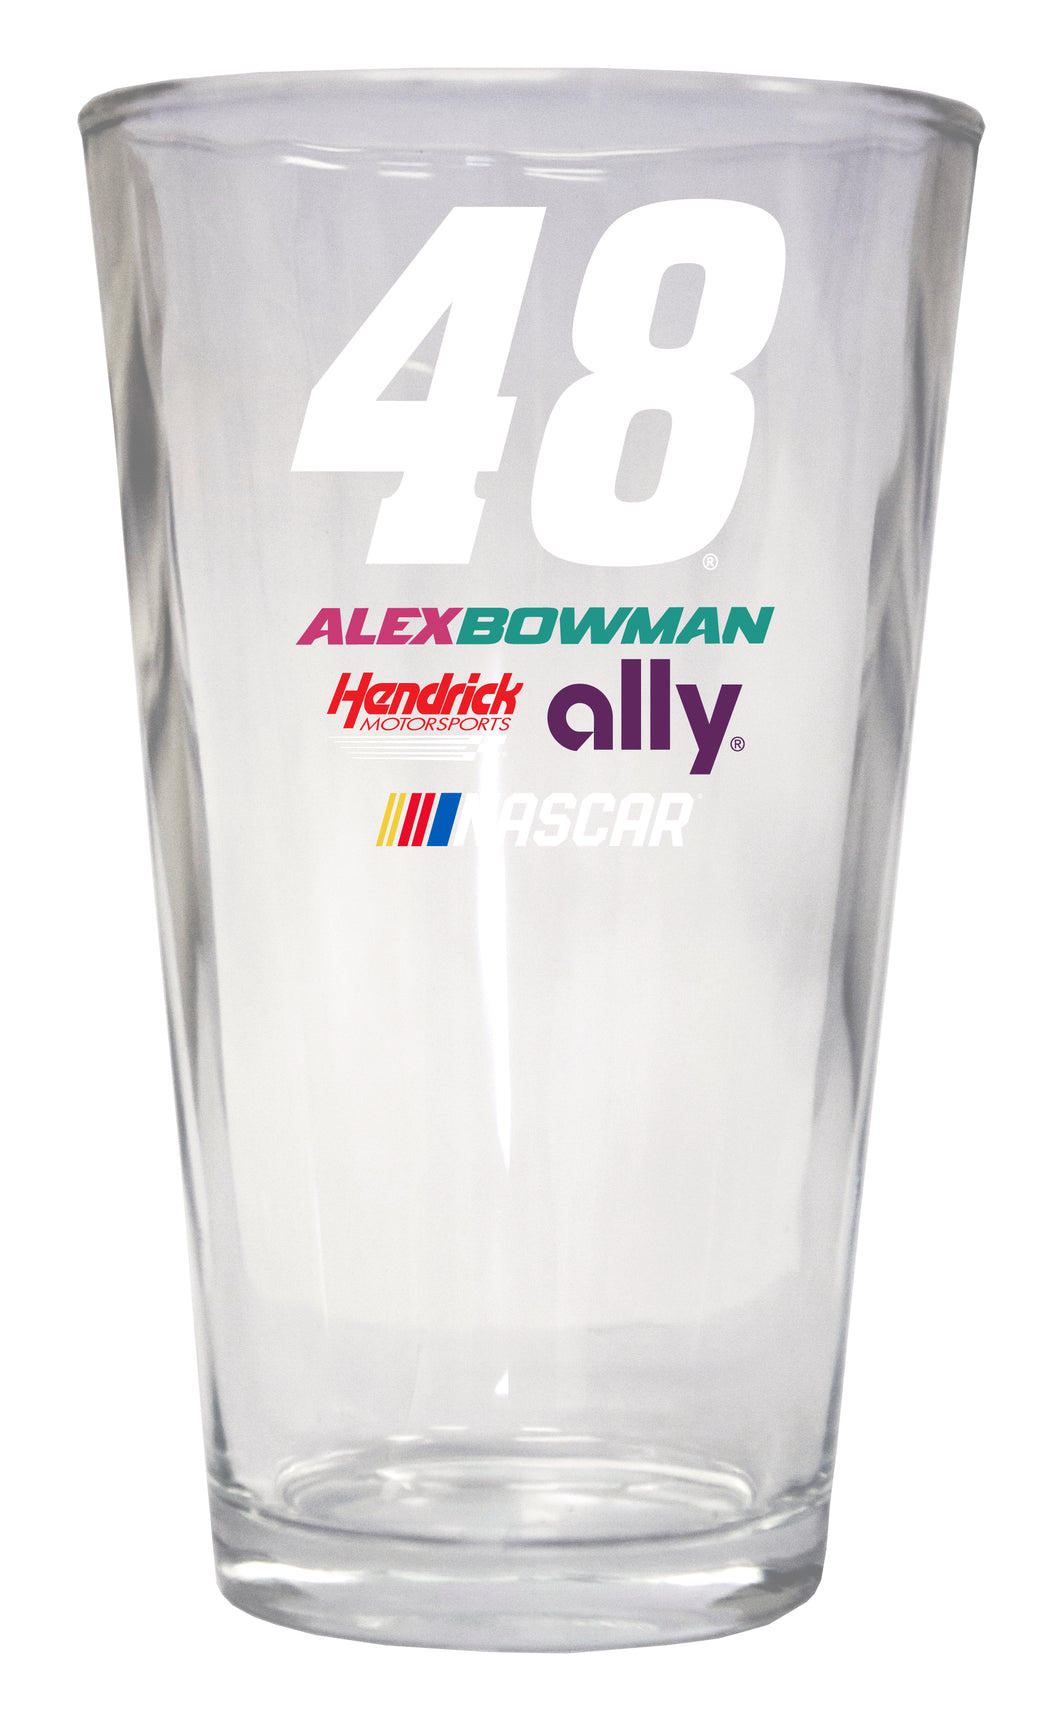 Alex Bowman #48 NASCAR Pint Glass 2-Pack